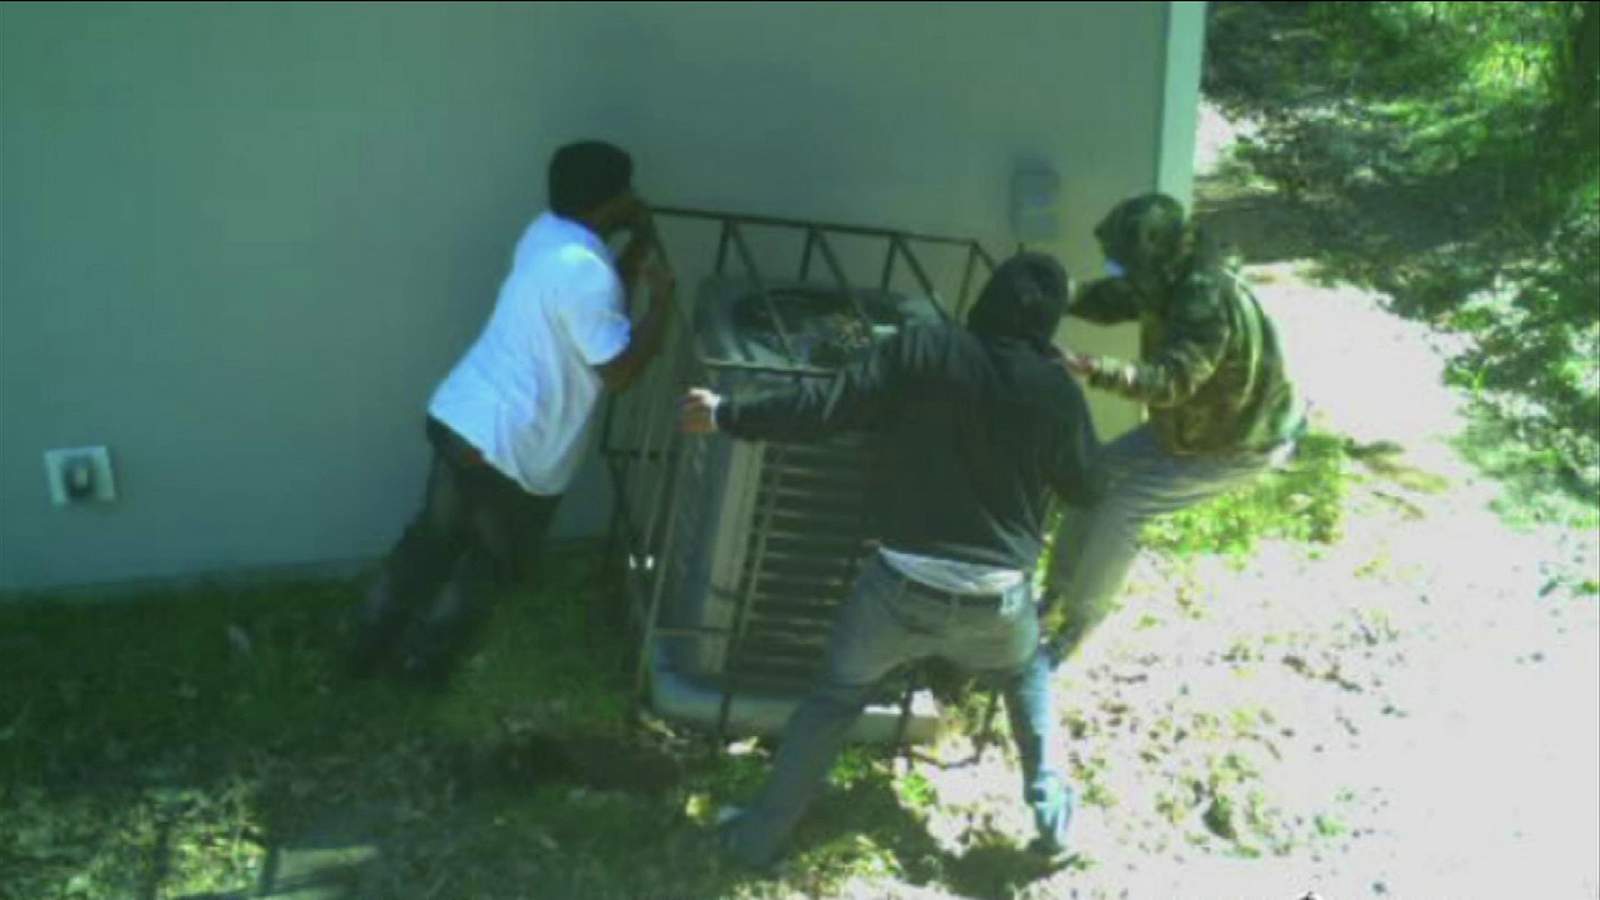 Thieves hit dozens of brand new Jacksonville homes